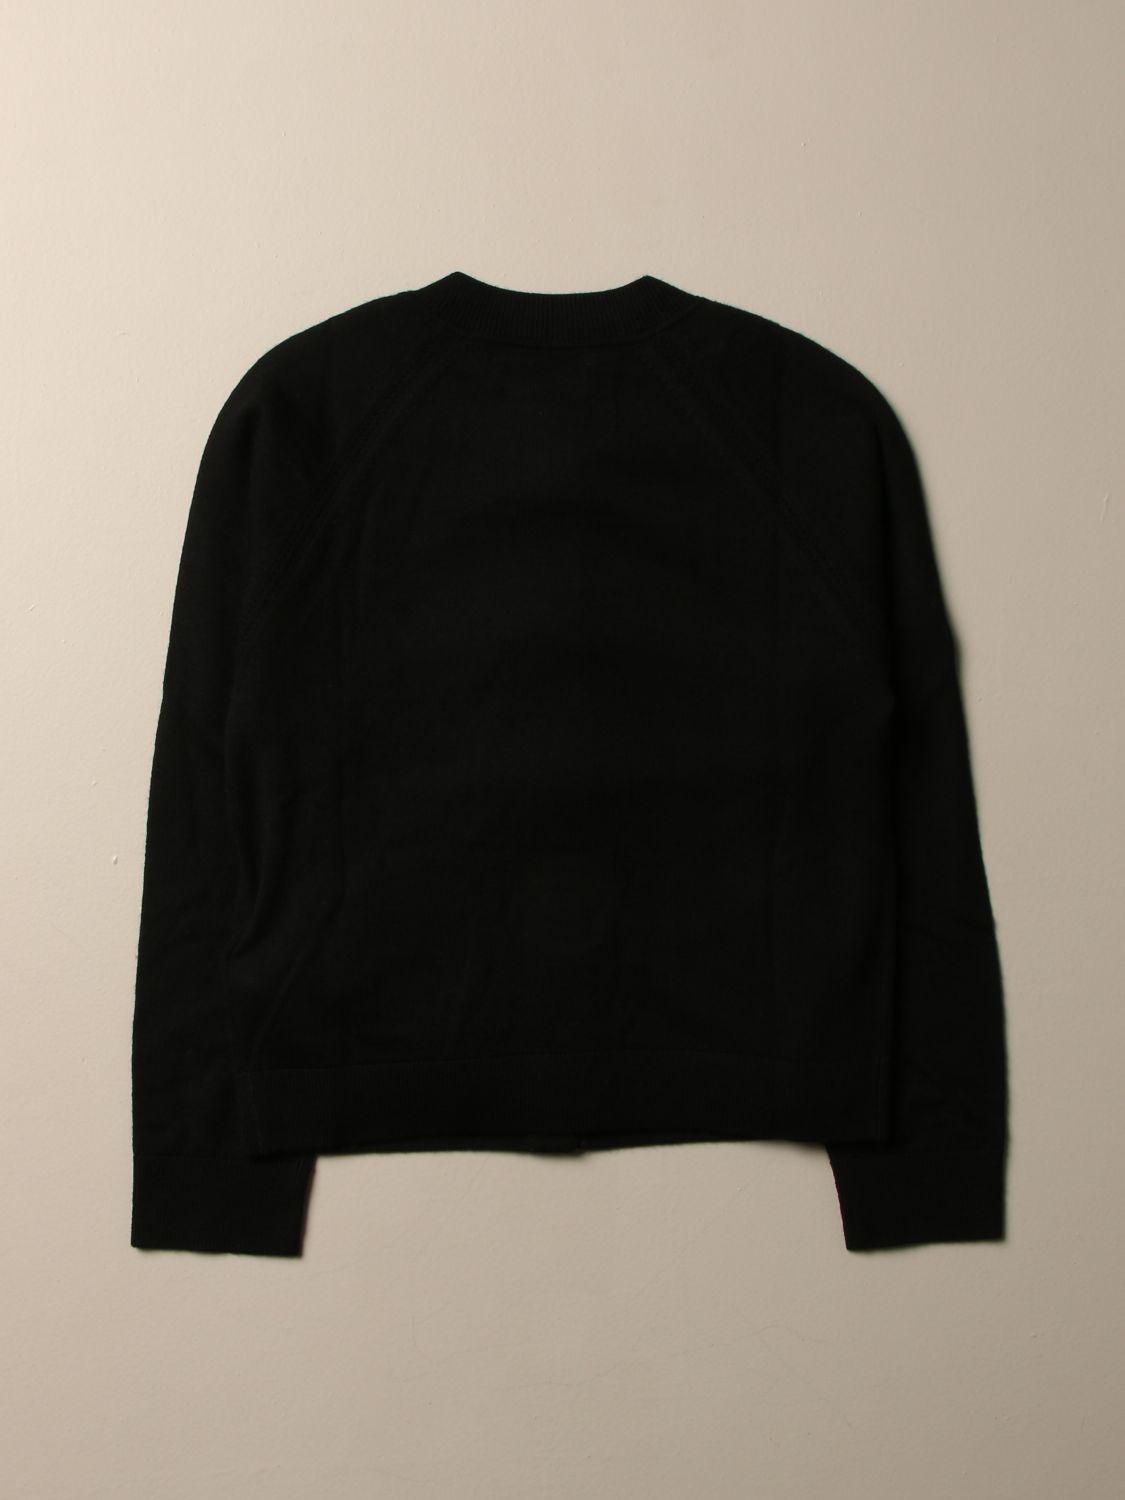 burberry black jumper